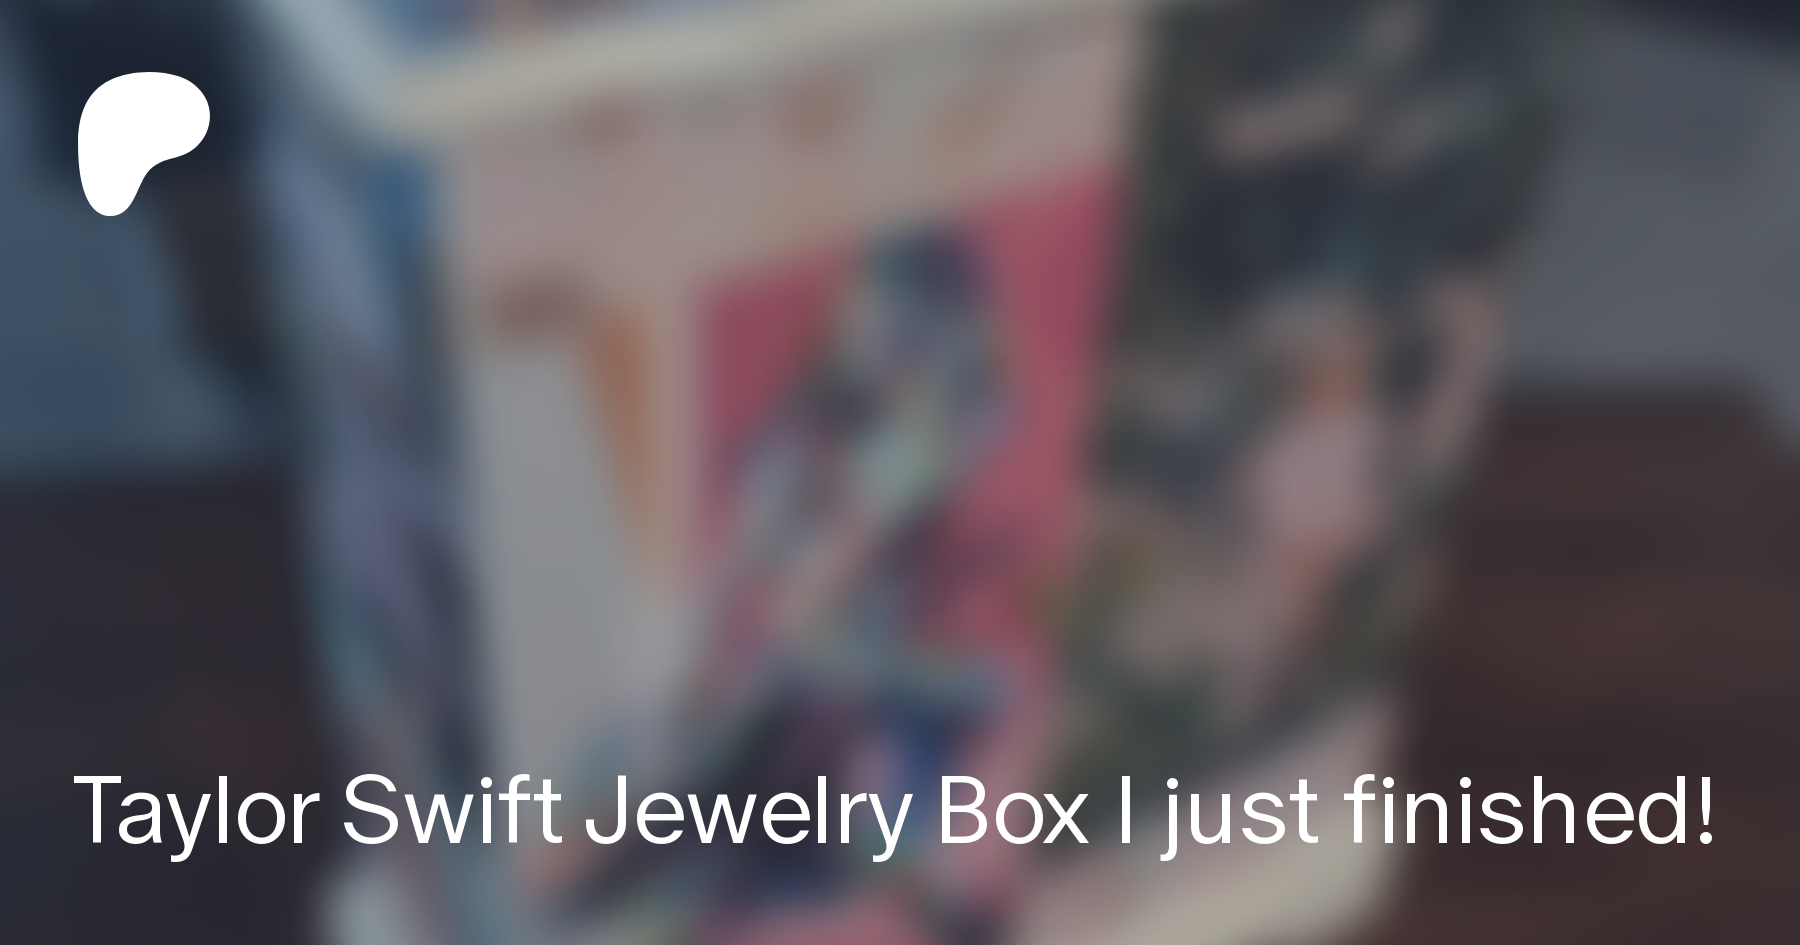 Taylor Swift Jewelry Box I just finished!